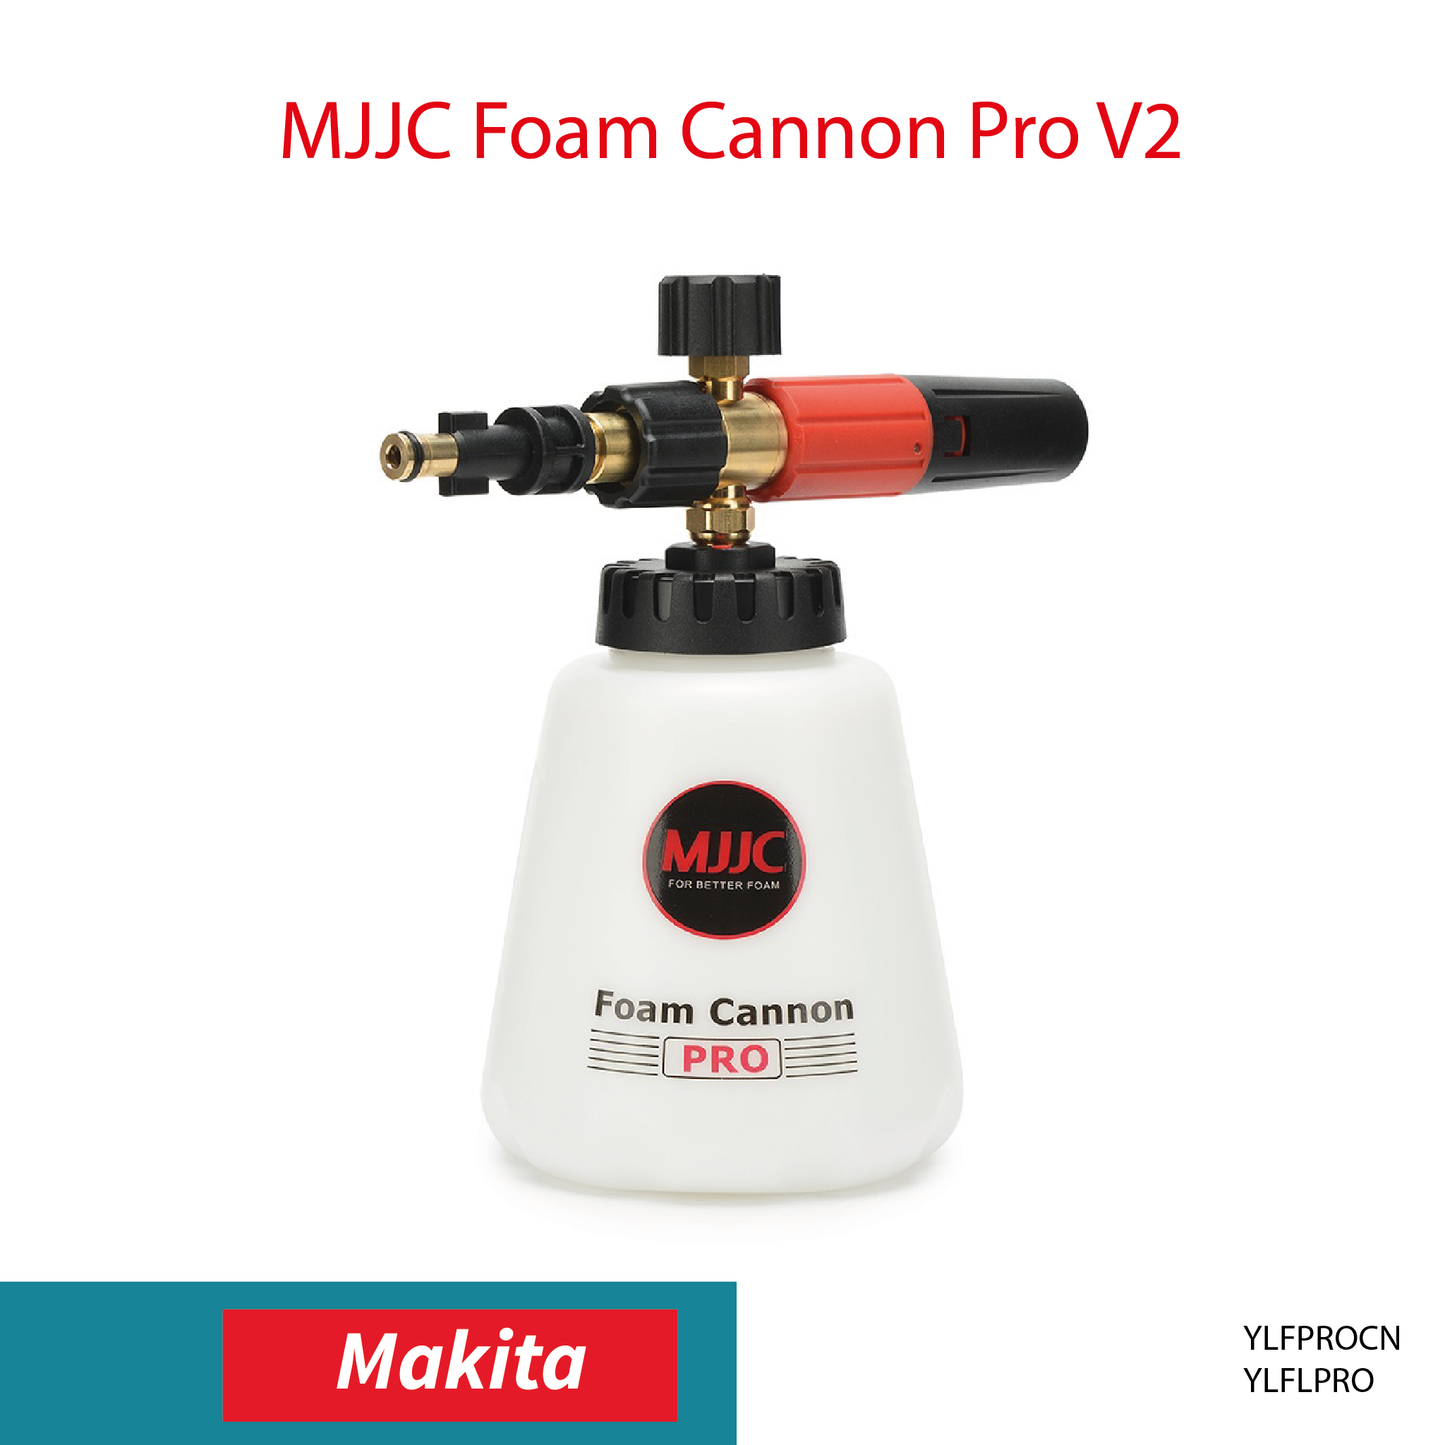 Makita pressure washer - MJJC Foam Cannon Pro V2 (Pressure Washer Snow Foam Lance Gun)